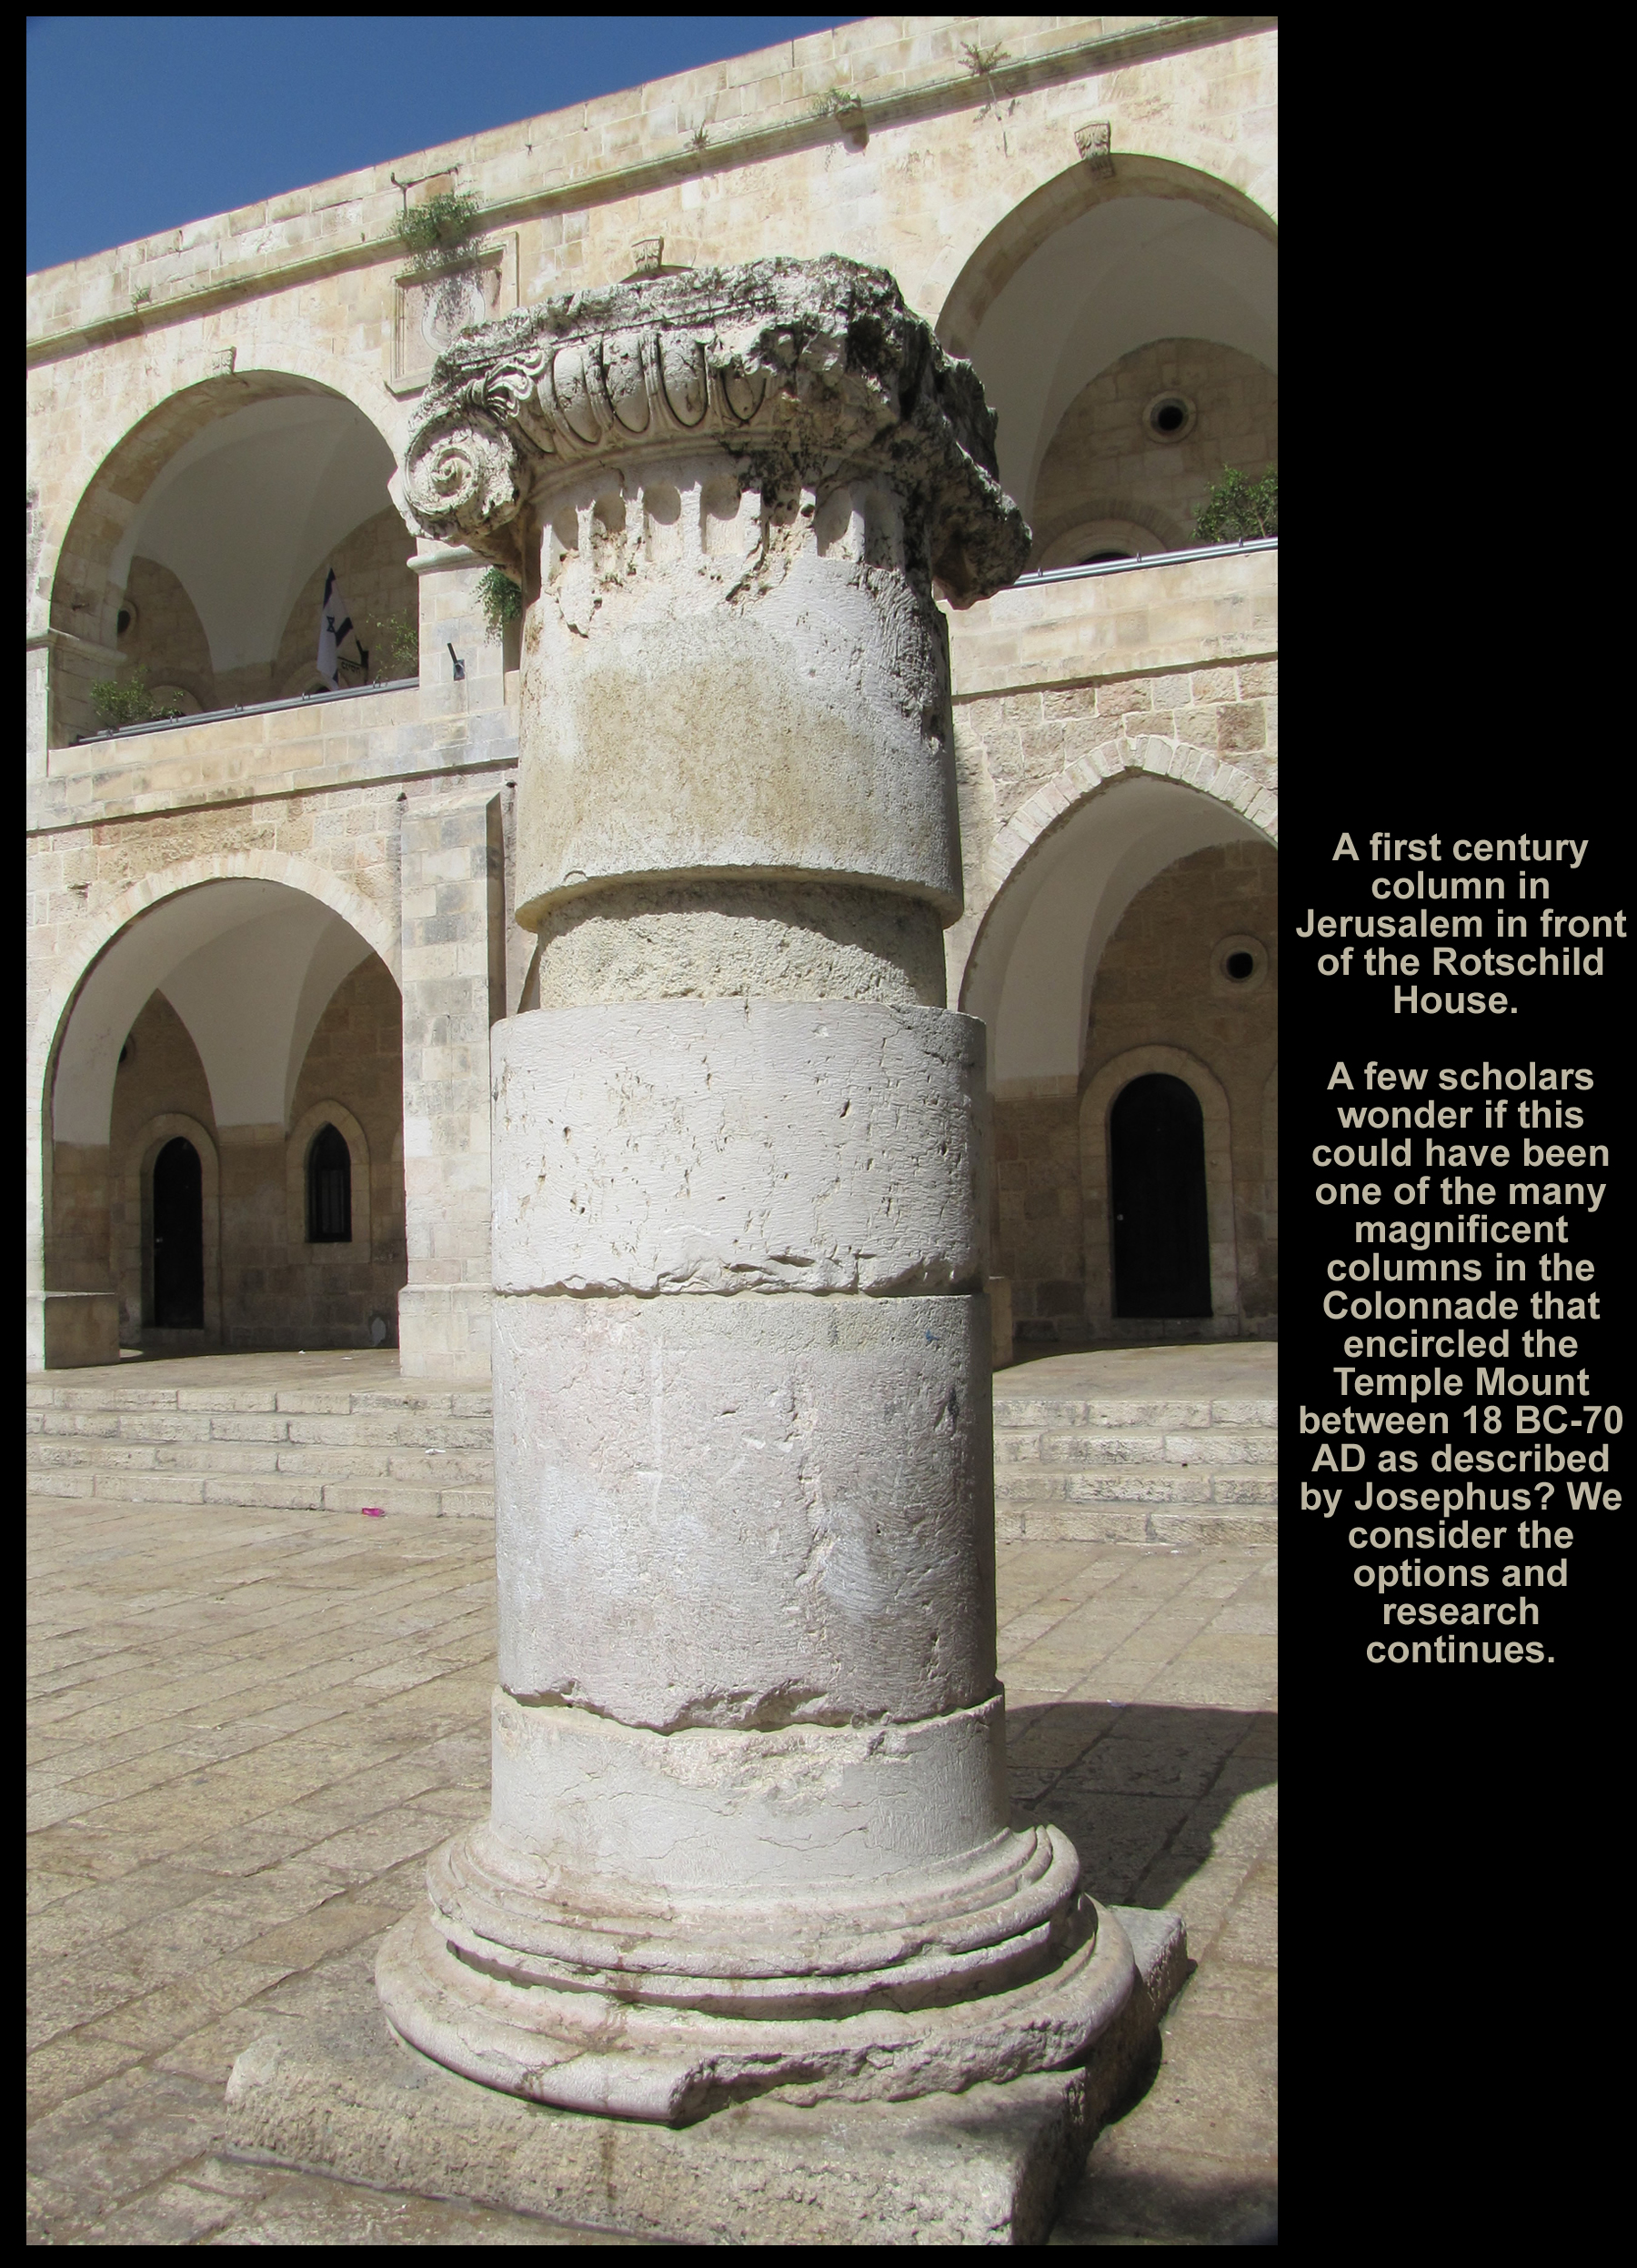 First century column in Jerusalem, Colonnade on New Testament Temple Mount described by Josephus